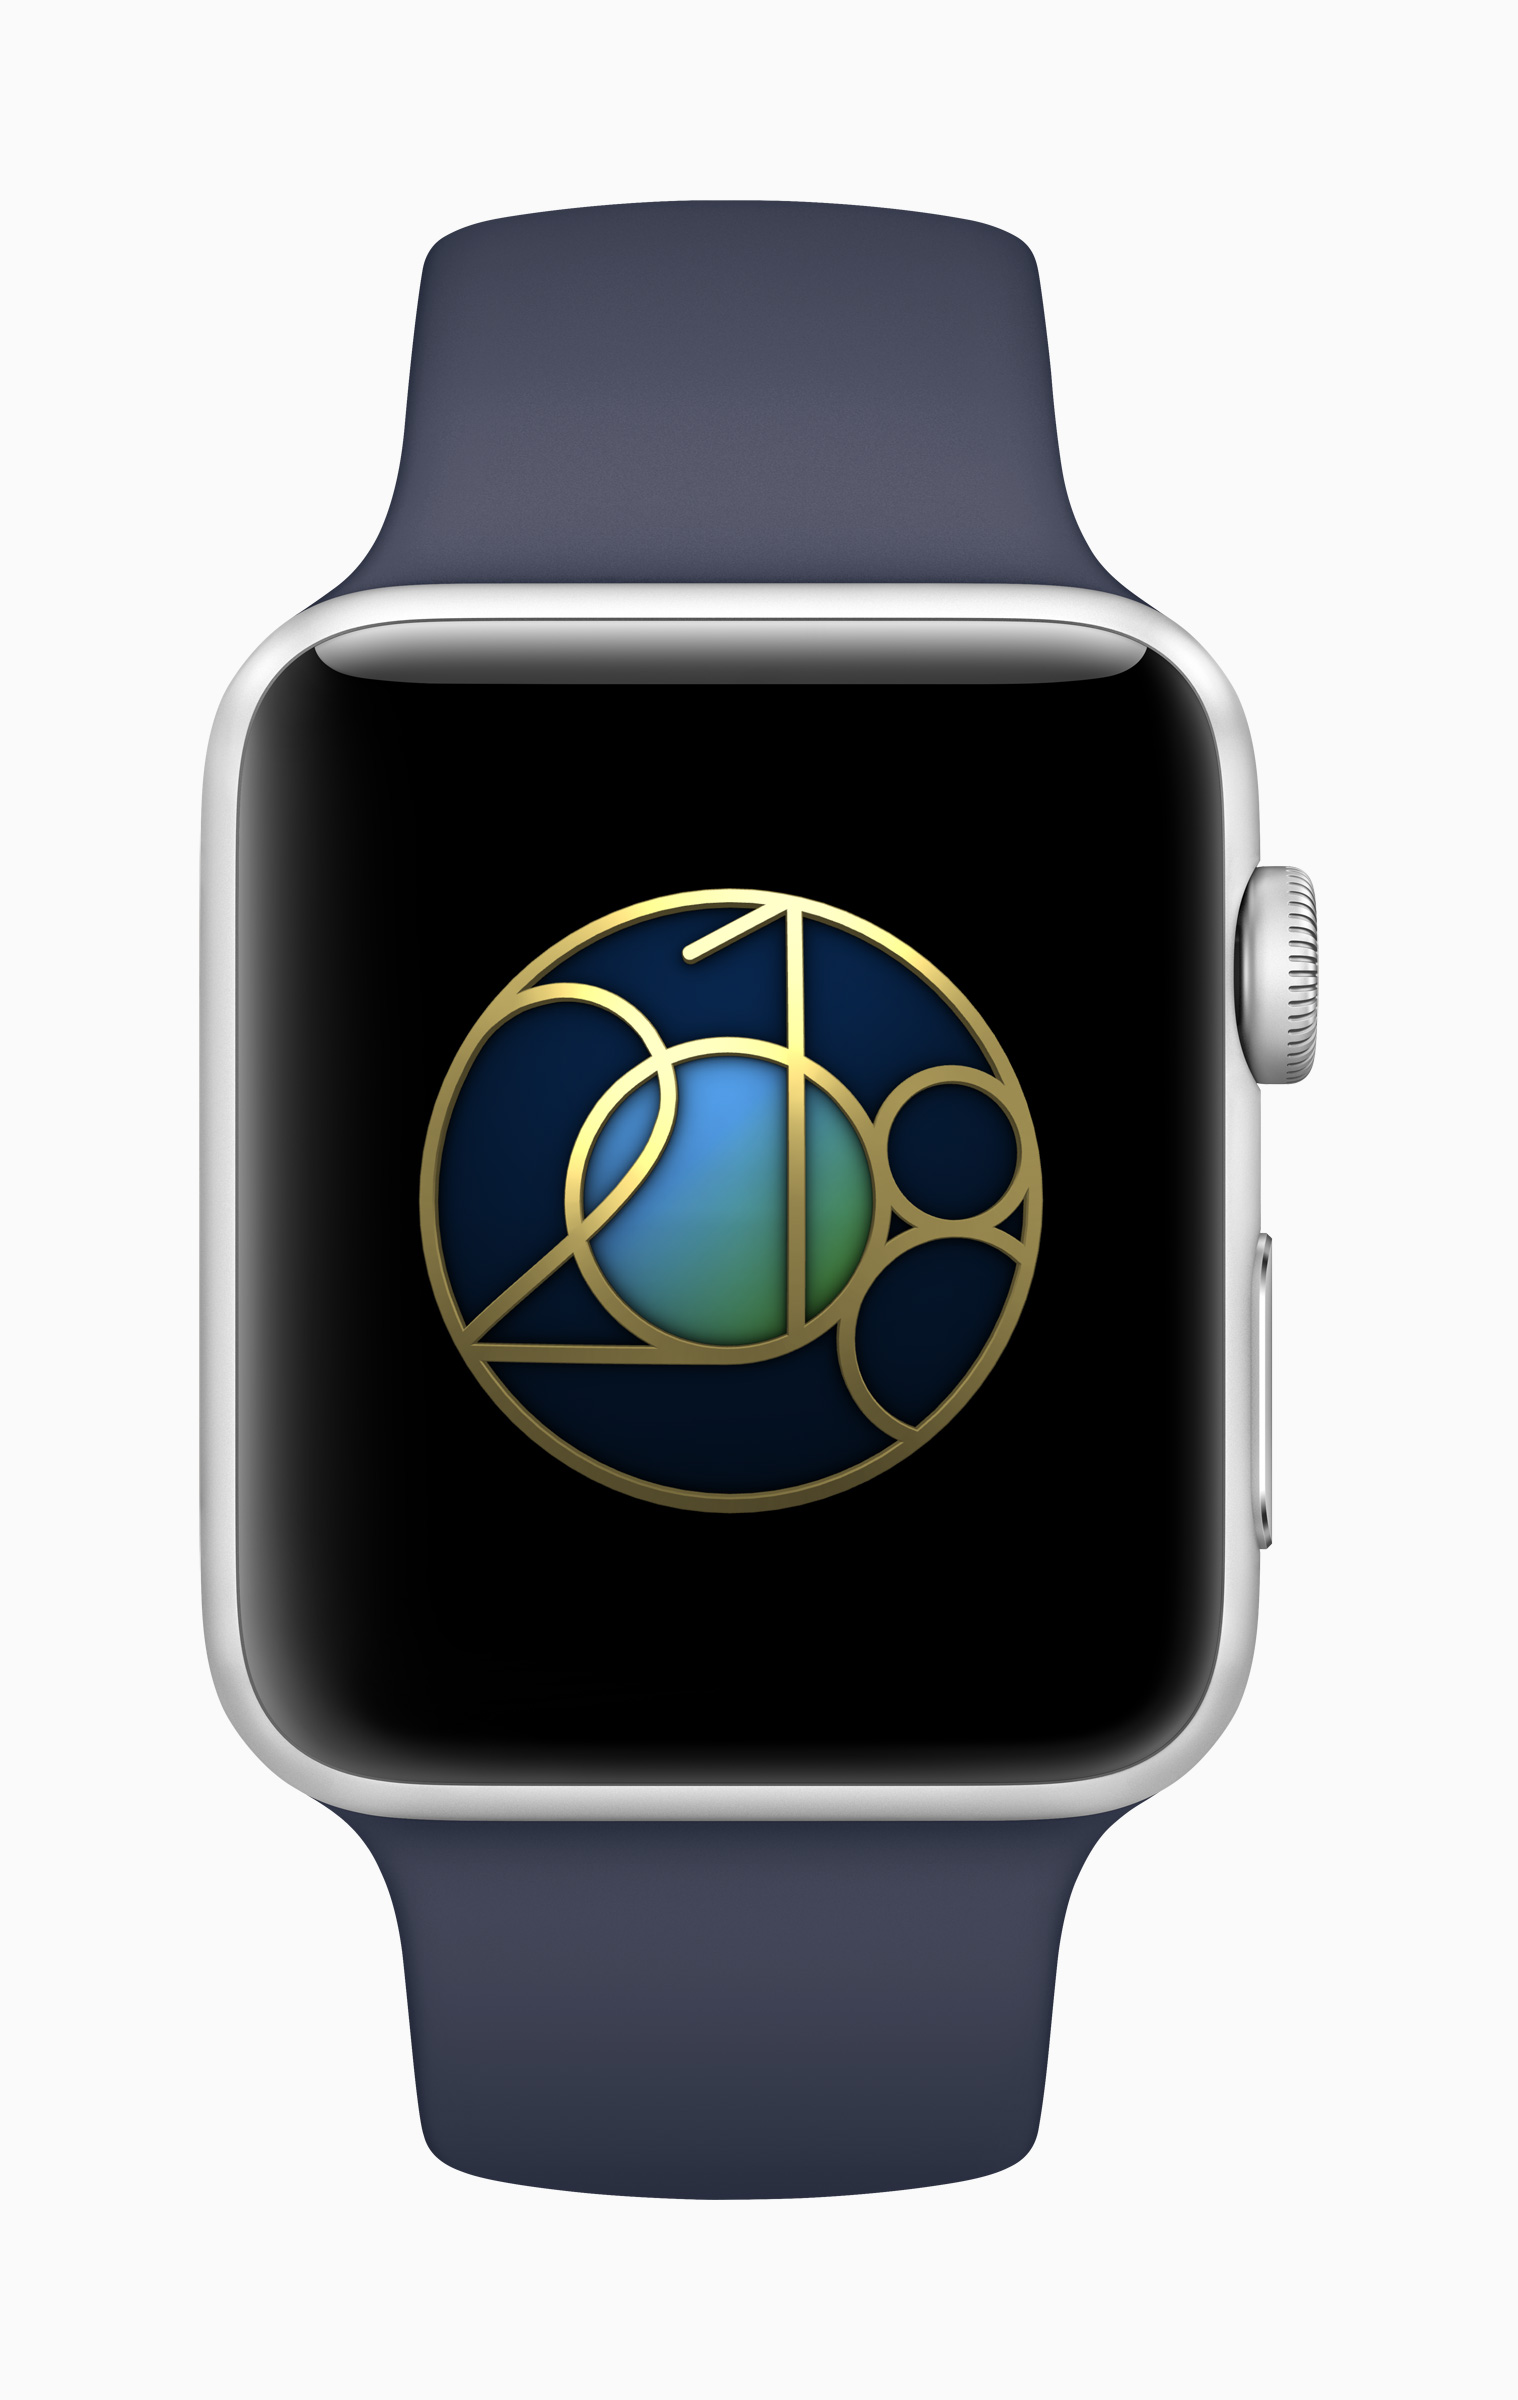 Apple Watch Earth Day Badge 04192018